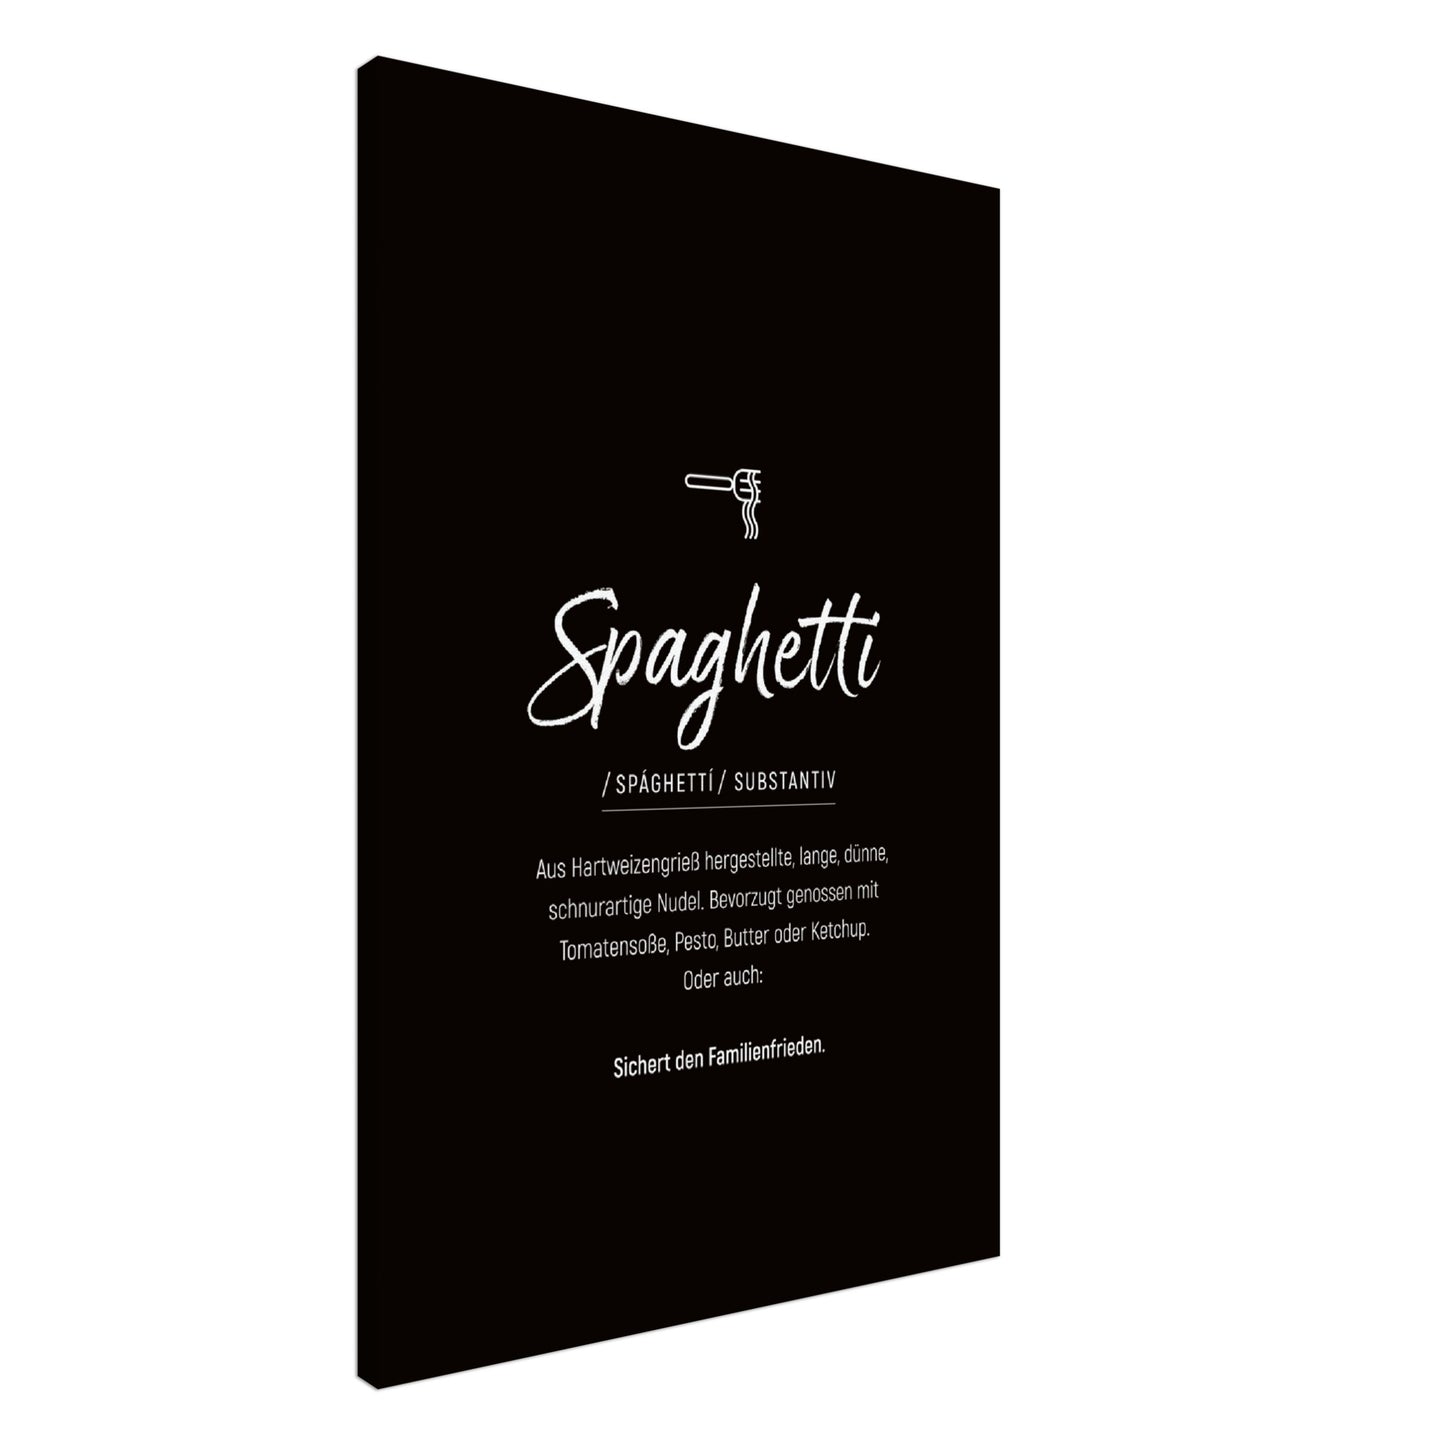 Spaghetti - Wortdefinition-Wandbild - Leinwand Schwarzgrau Neutral im Hochformat - Typografie Worte Sprache Leben Alltag